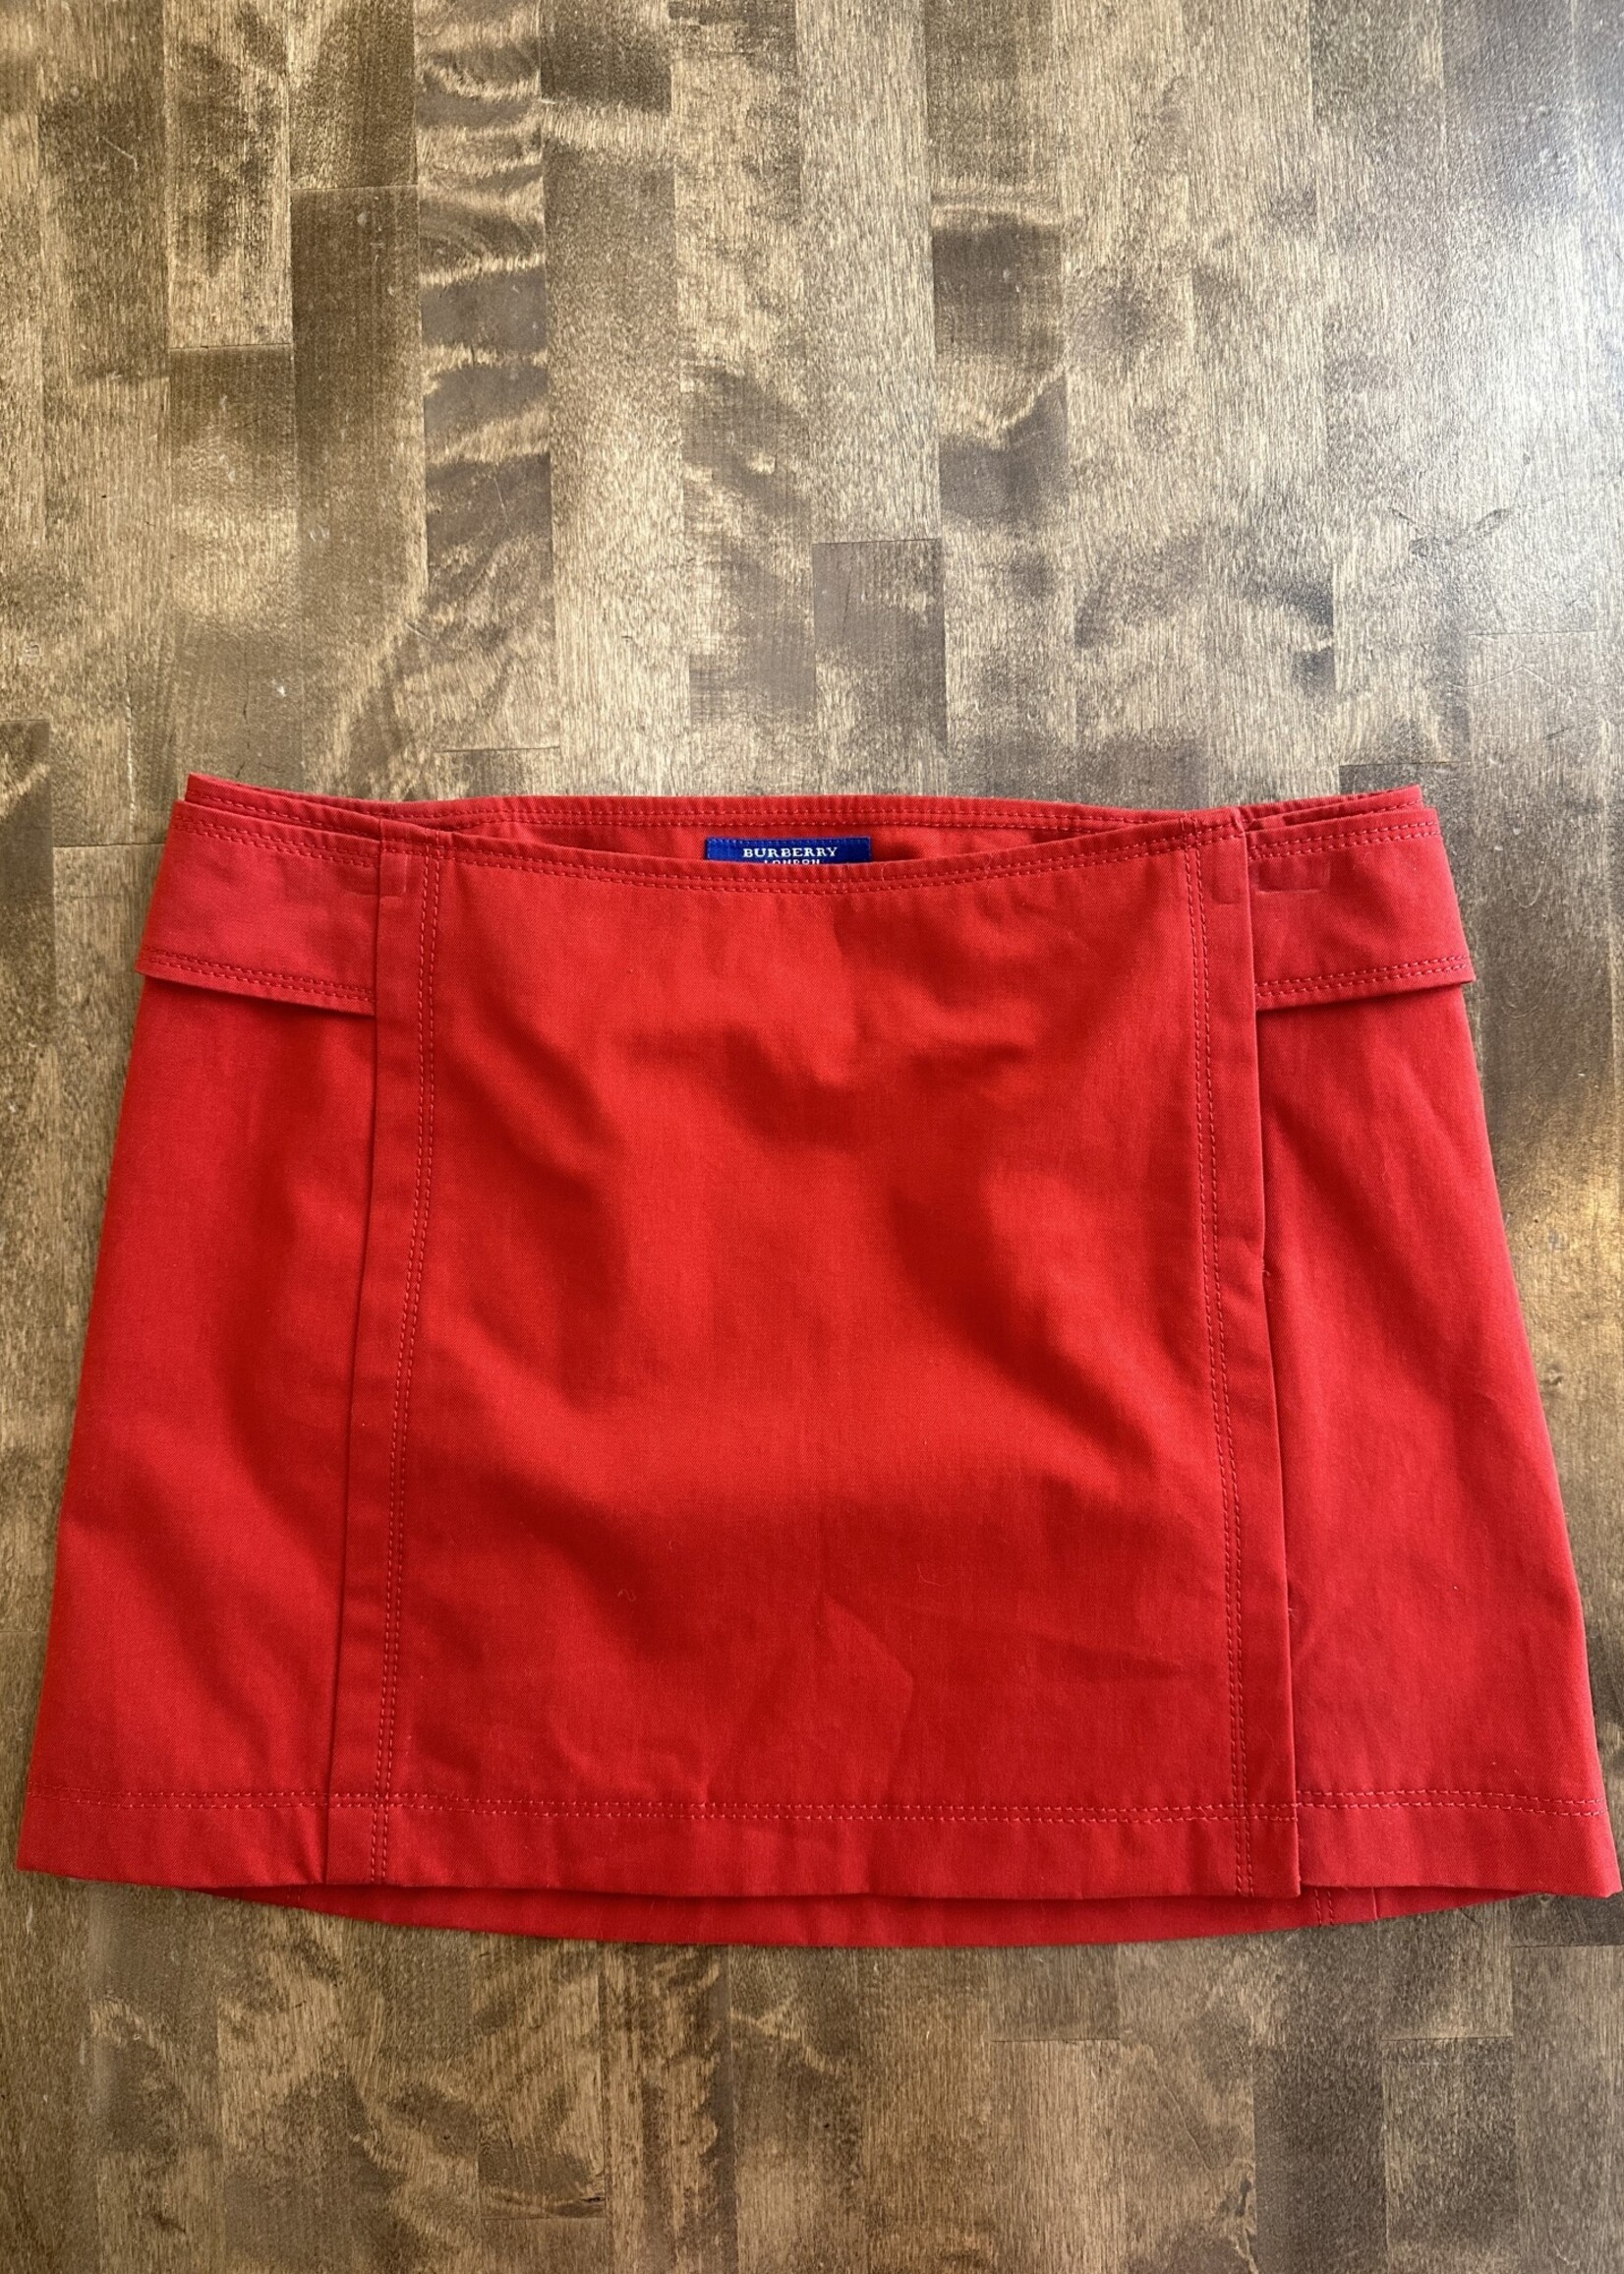 Burberry Red Mini Skirt 28 S